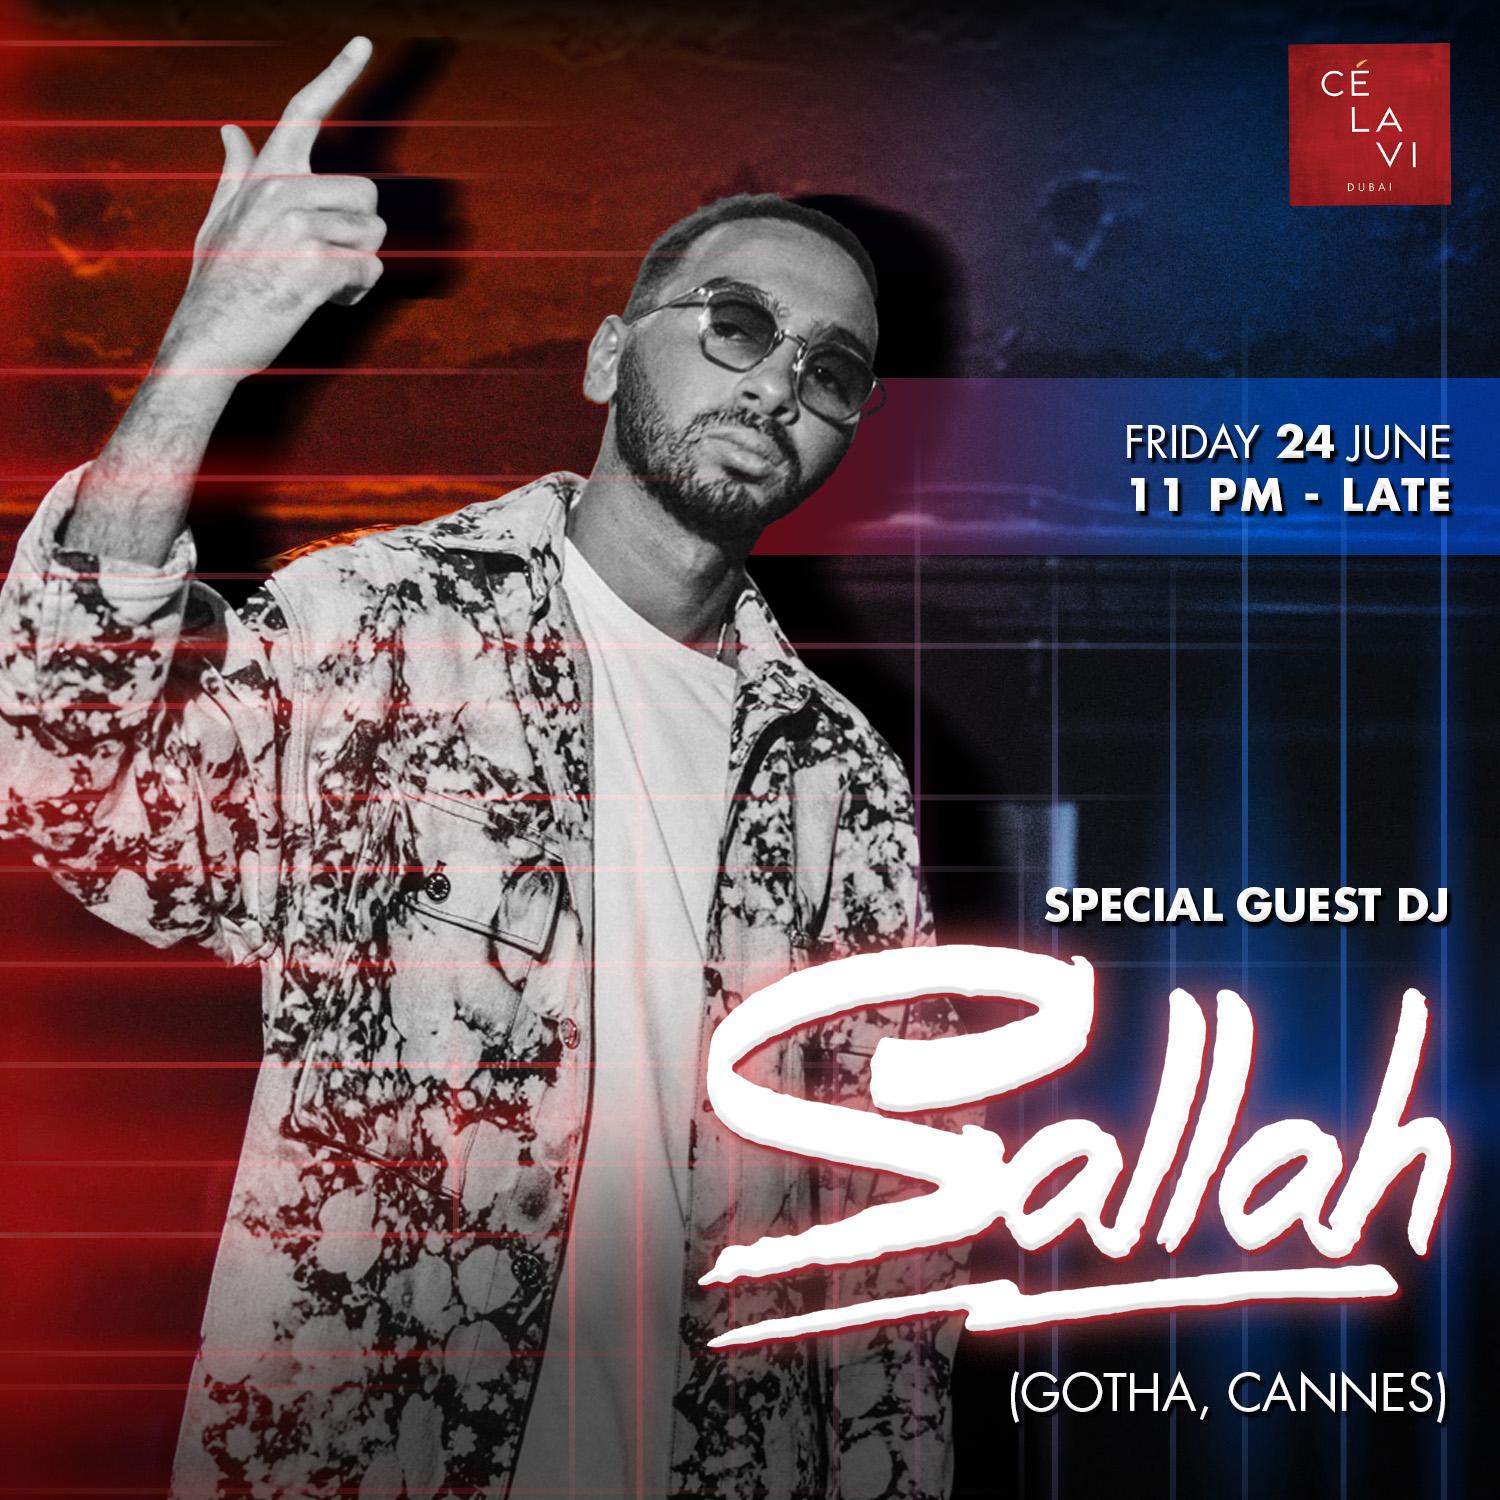 Catch DJ SALLAH live this Friday